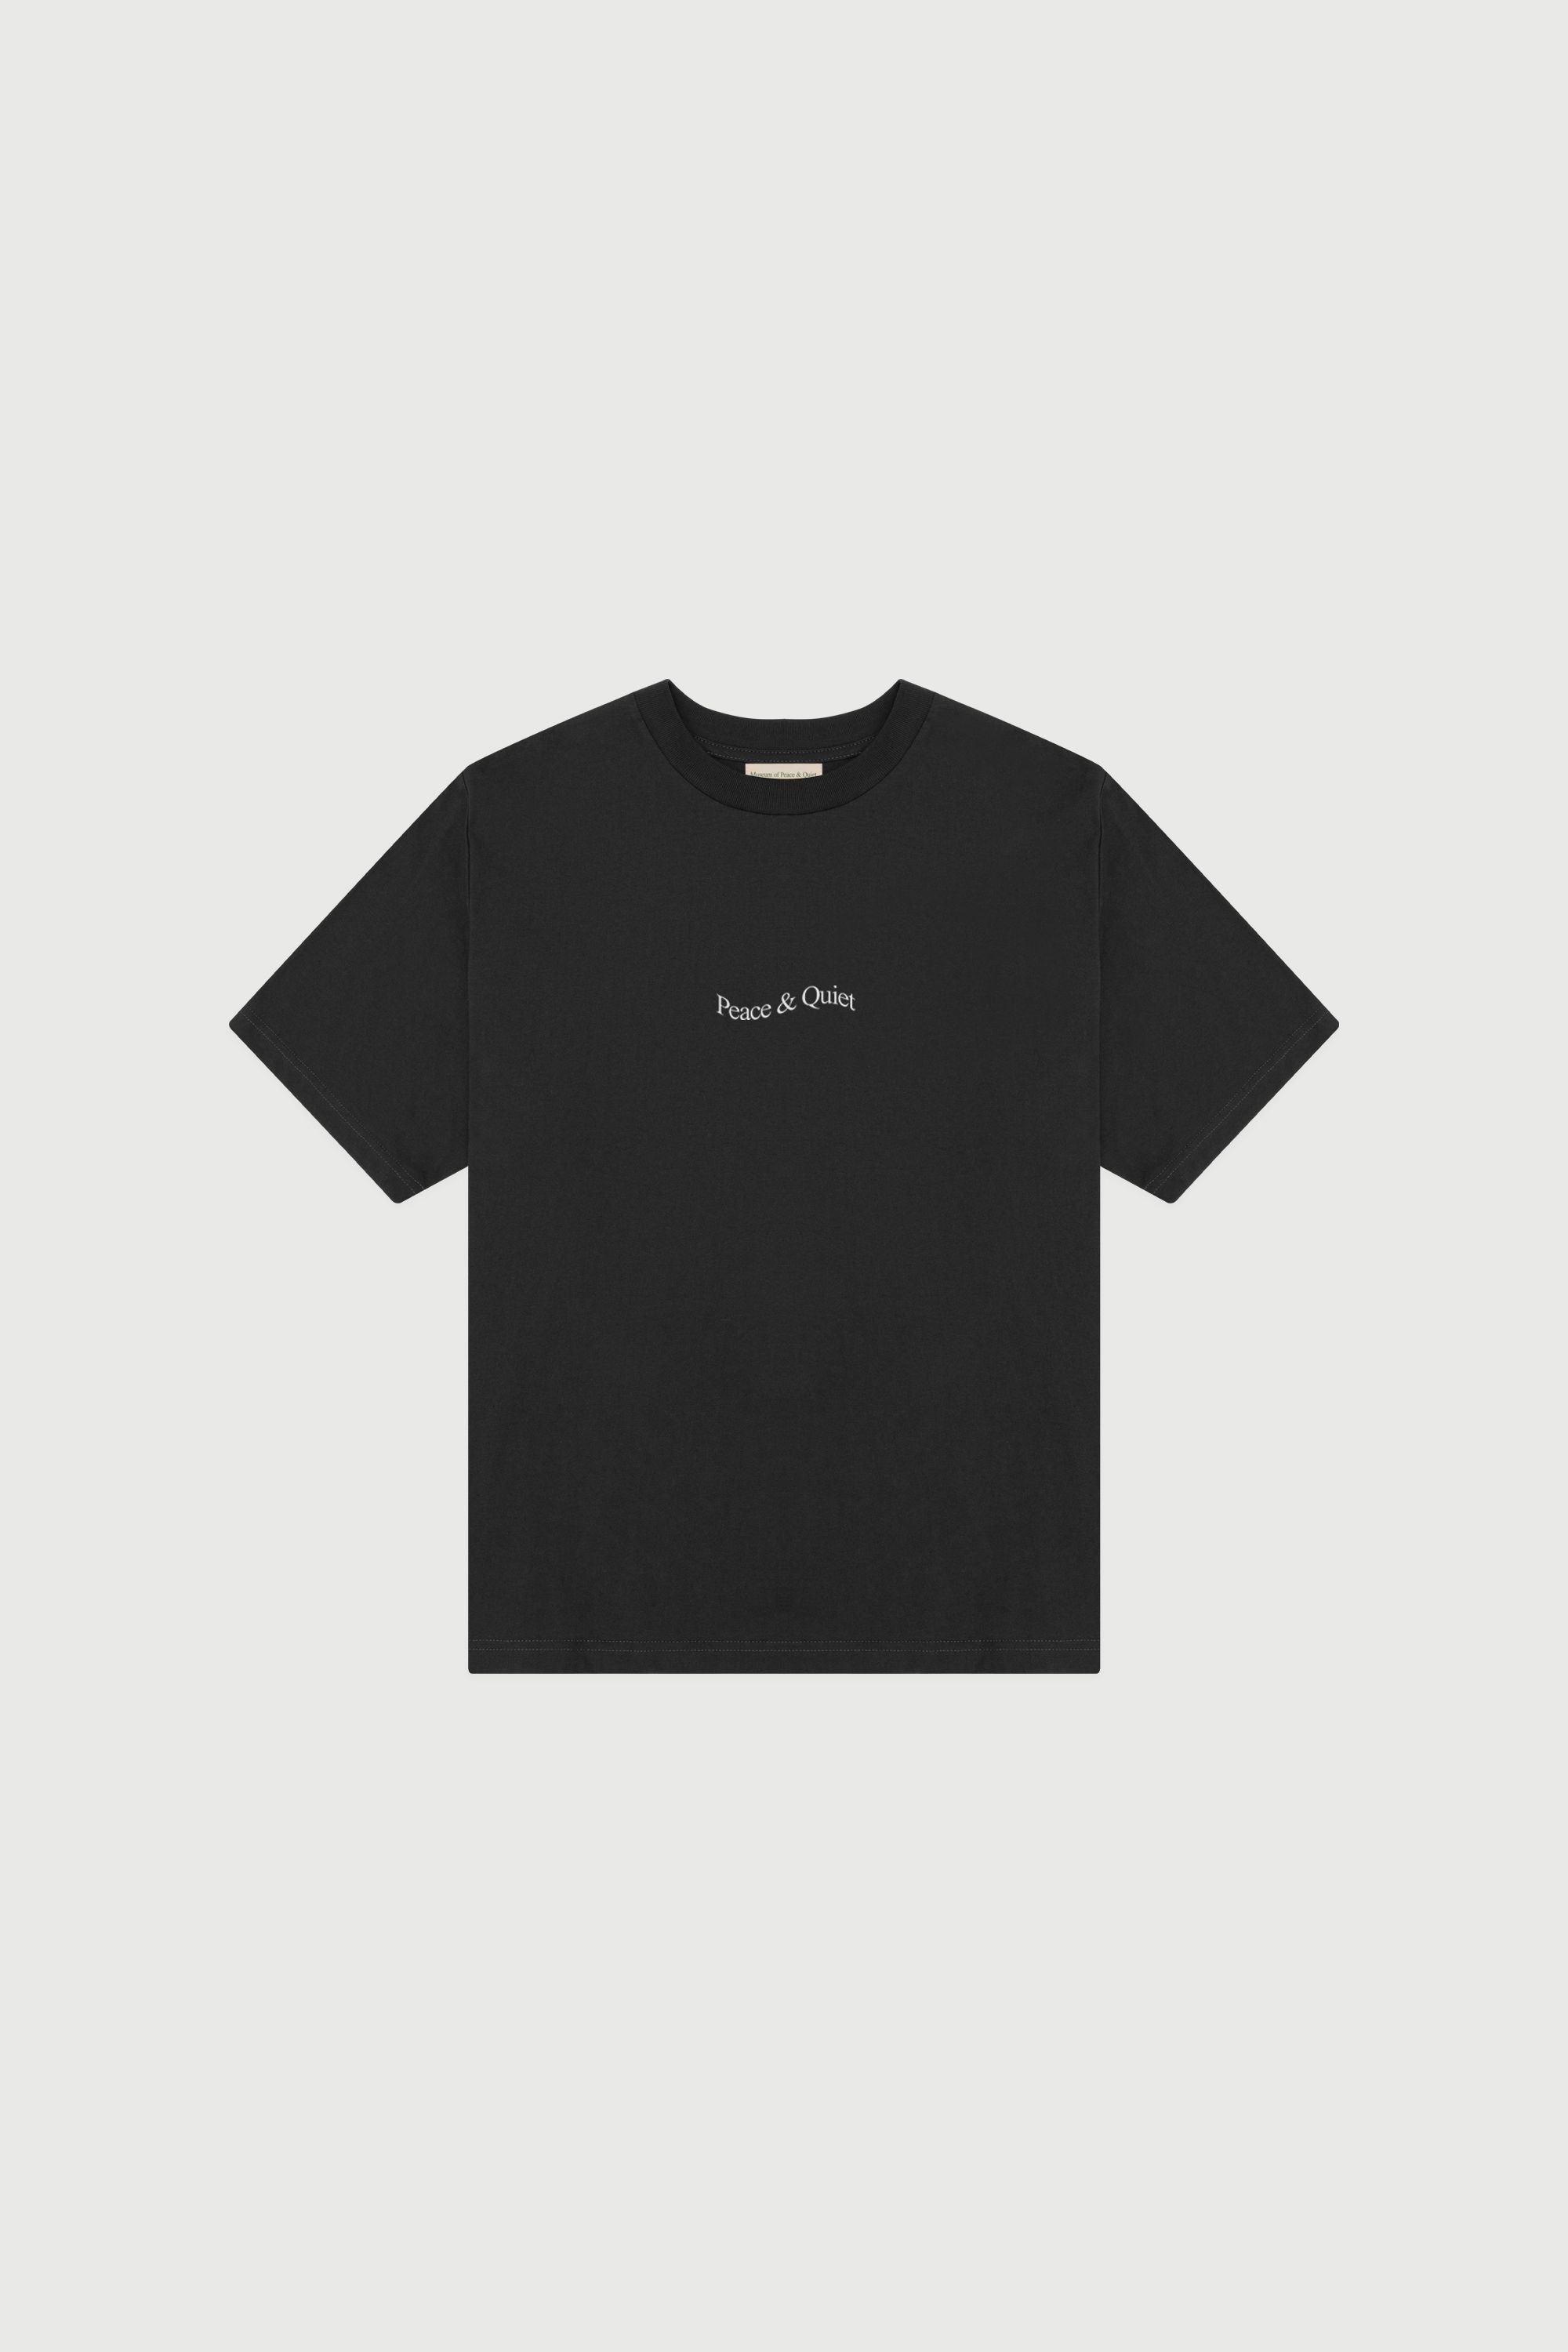 Wordmark T-Shirt - Black — Museum of Peace & Quiet